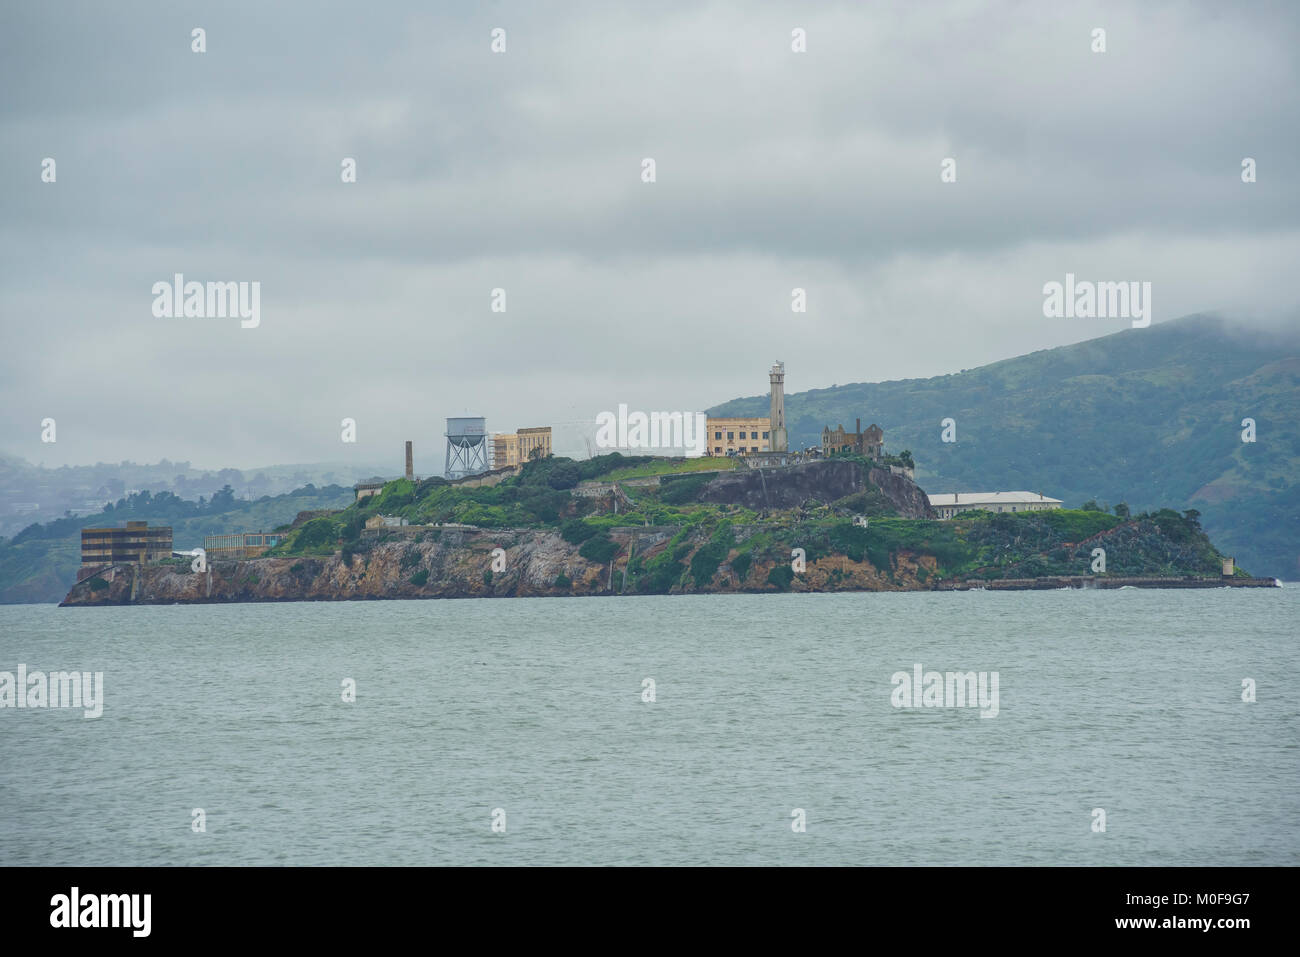 Die berühmte Insel Alcatraz in einem bewölkten Tag, San Francisco, Kalifornien Stockfoto